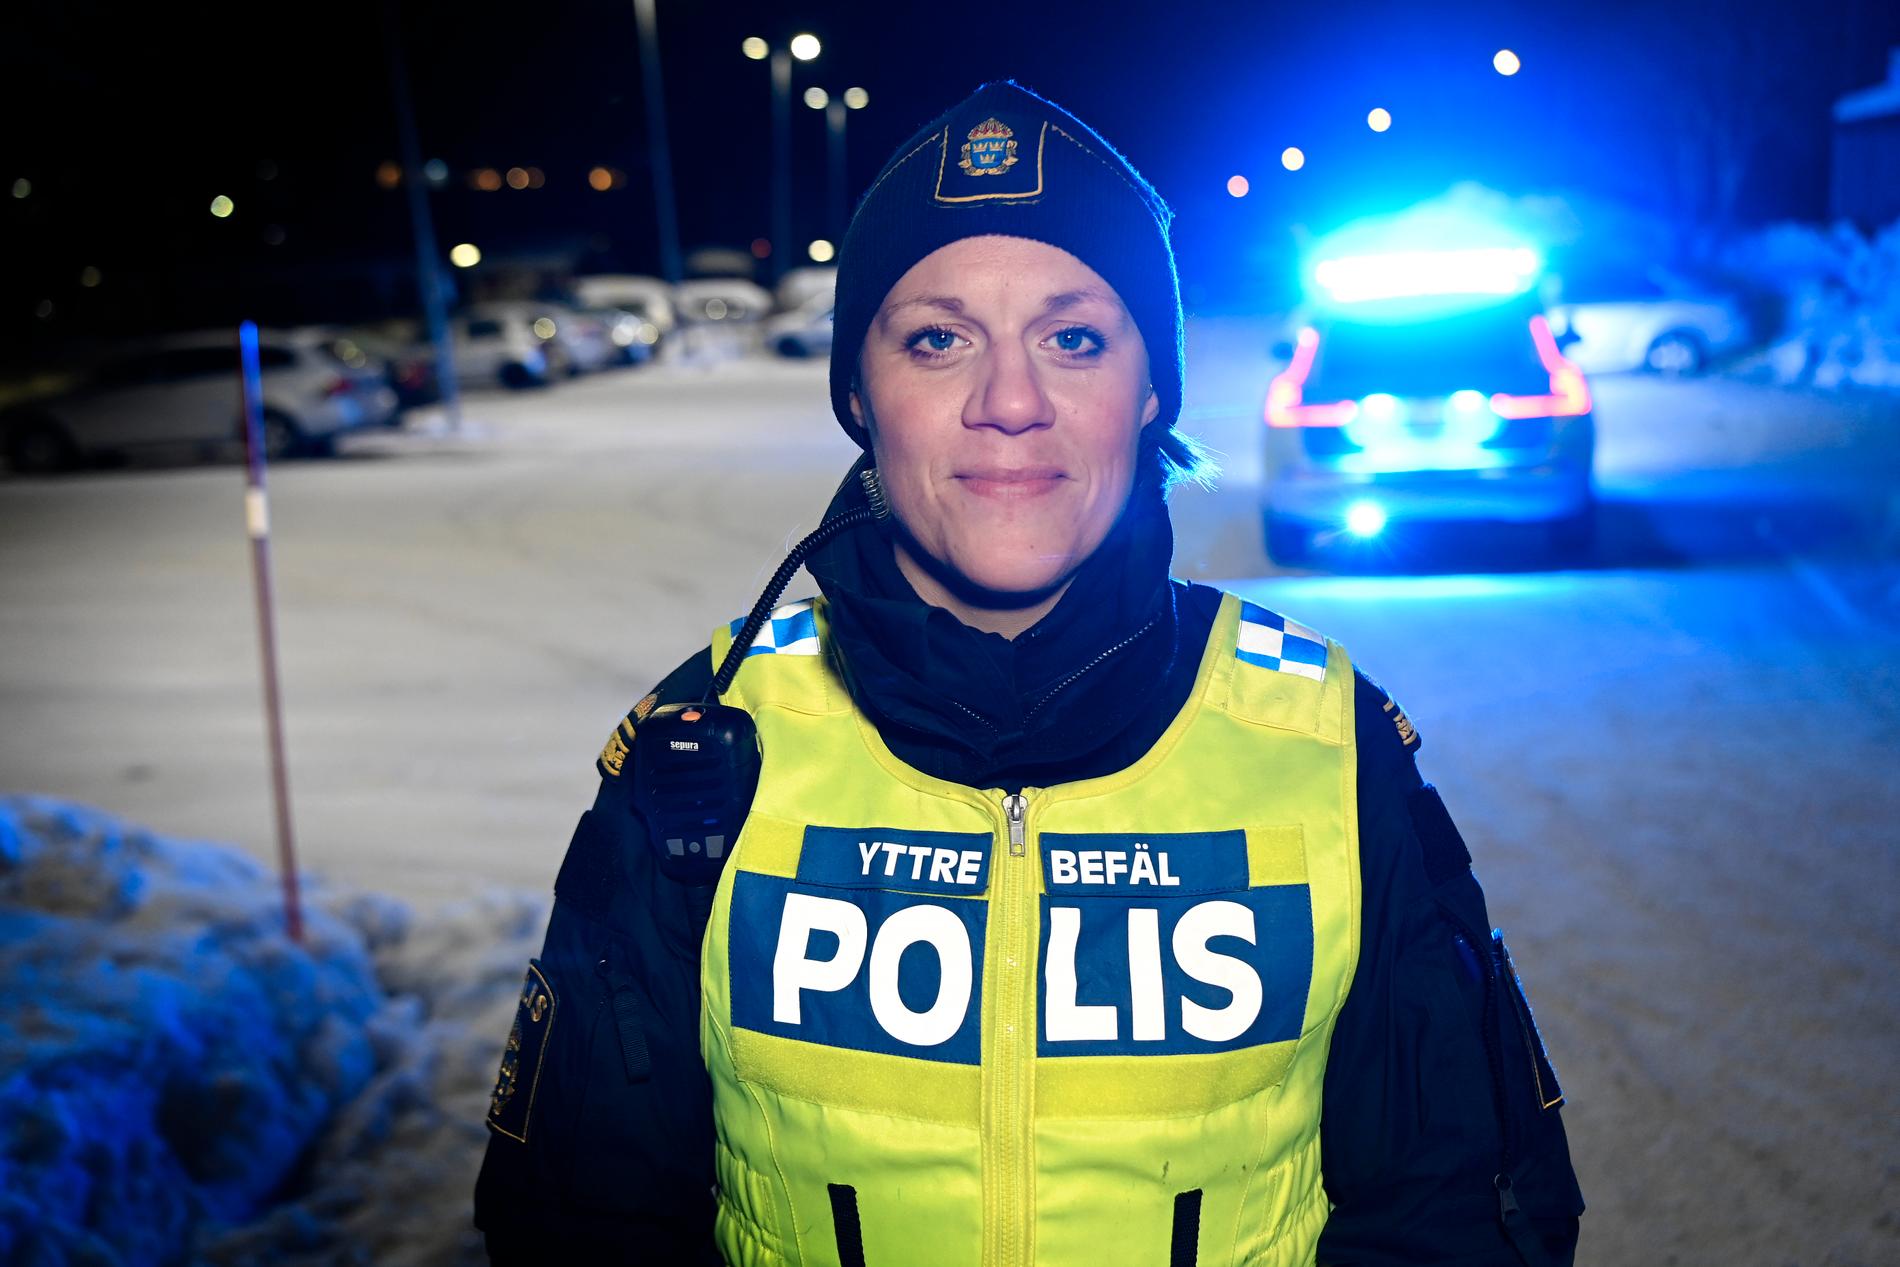 Hanna Stoltz, polisens yttre befäl i Sundsvall.